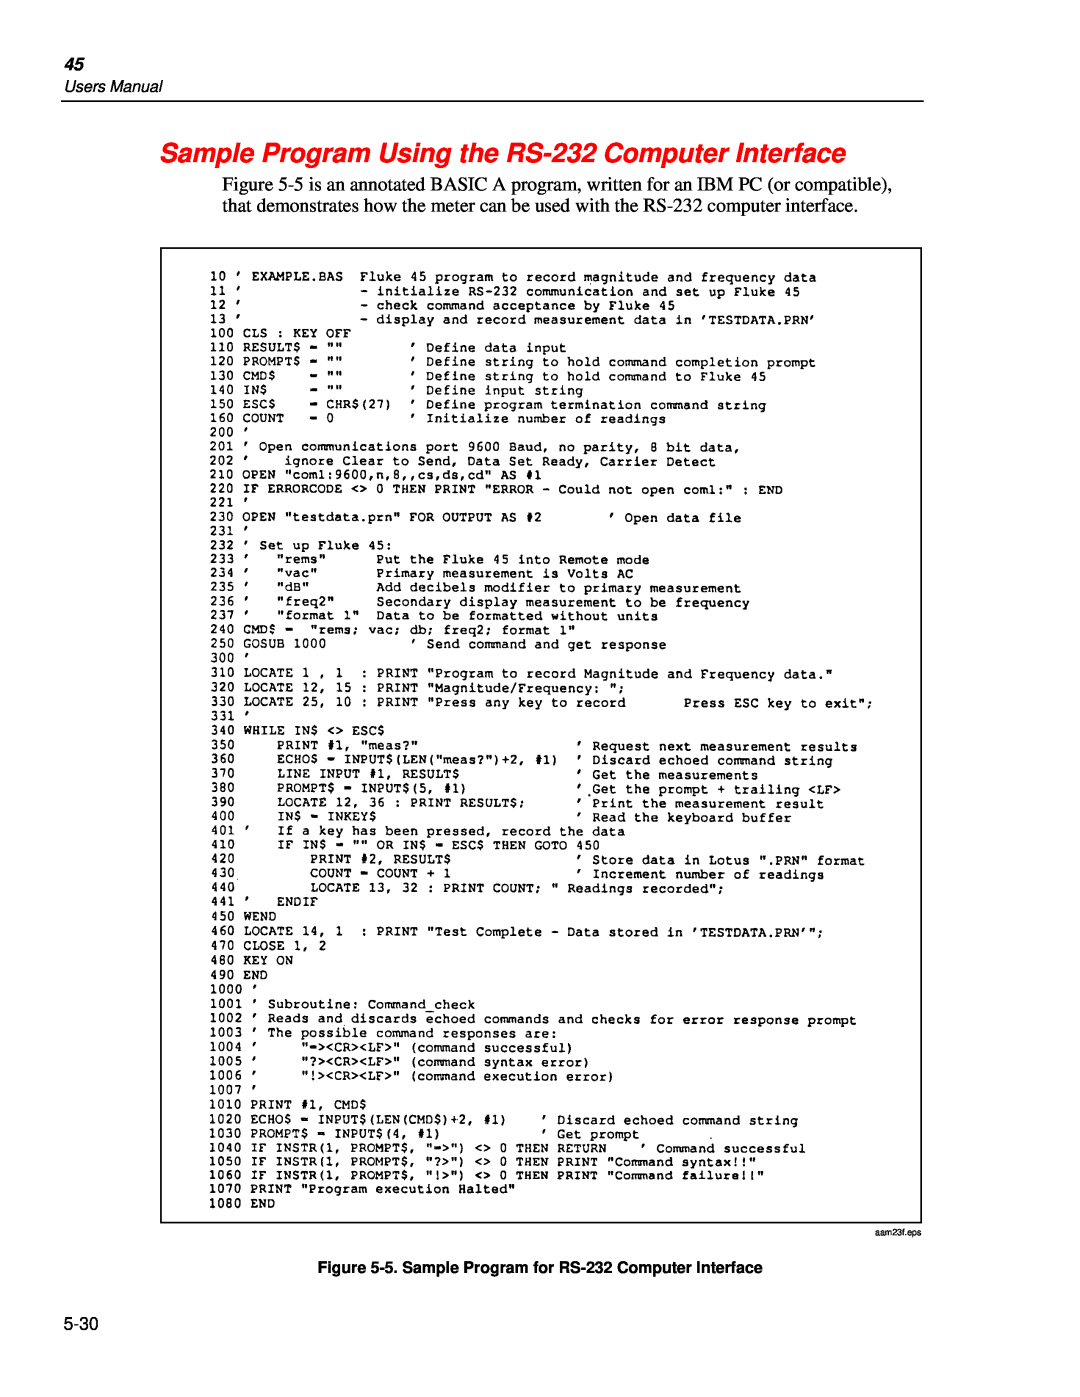 Fluke 45 user manual Sample Program Using the RS-232Computer Interface, 5-30, aam23f.eps 